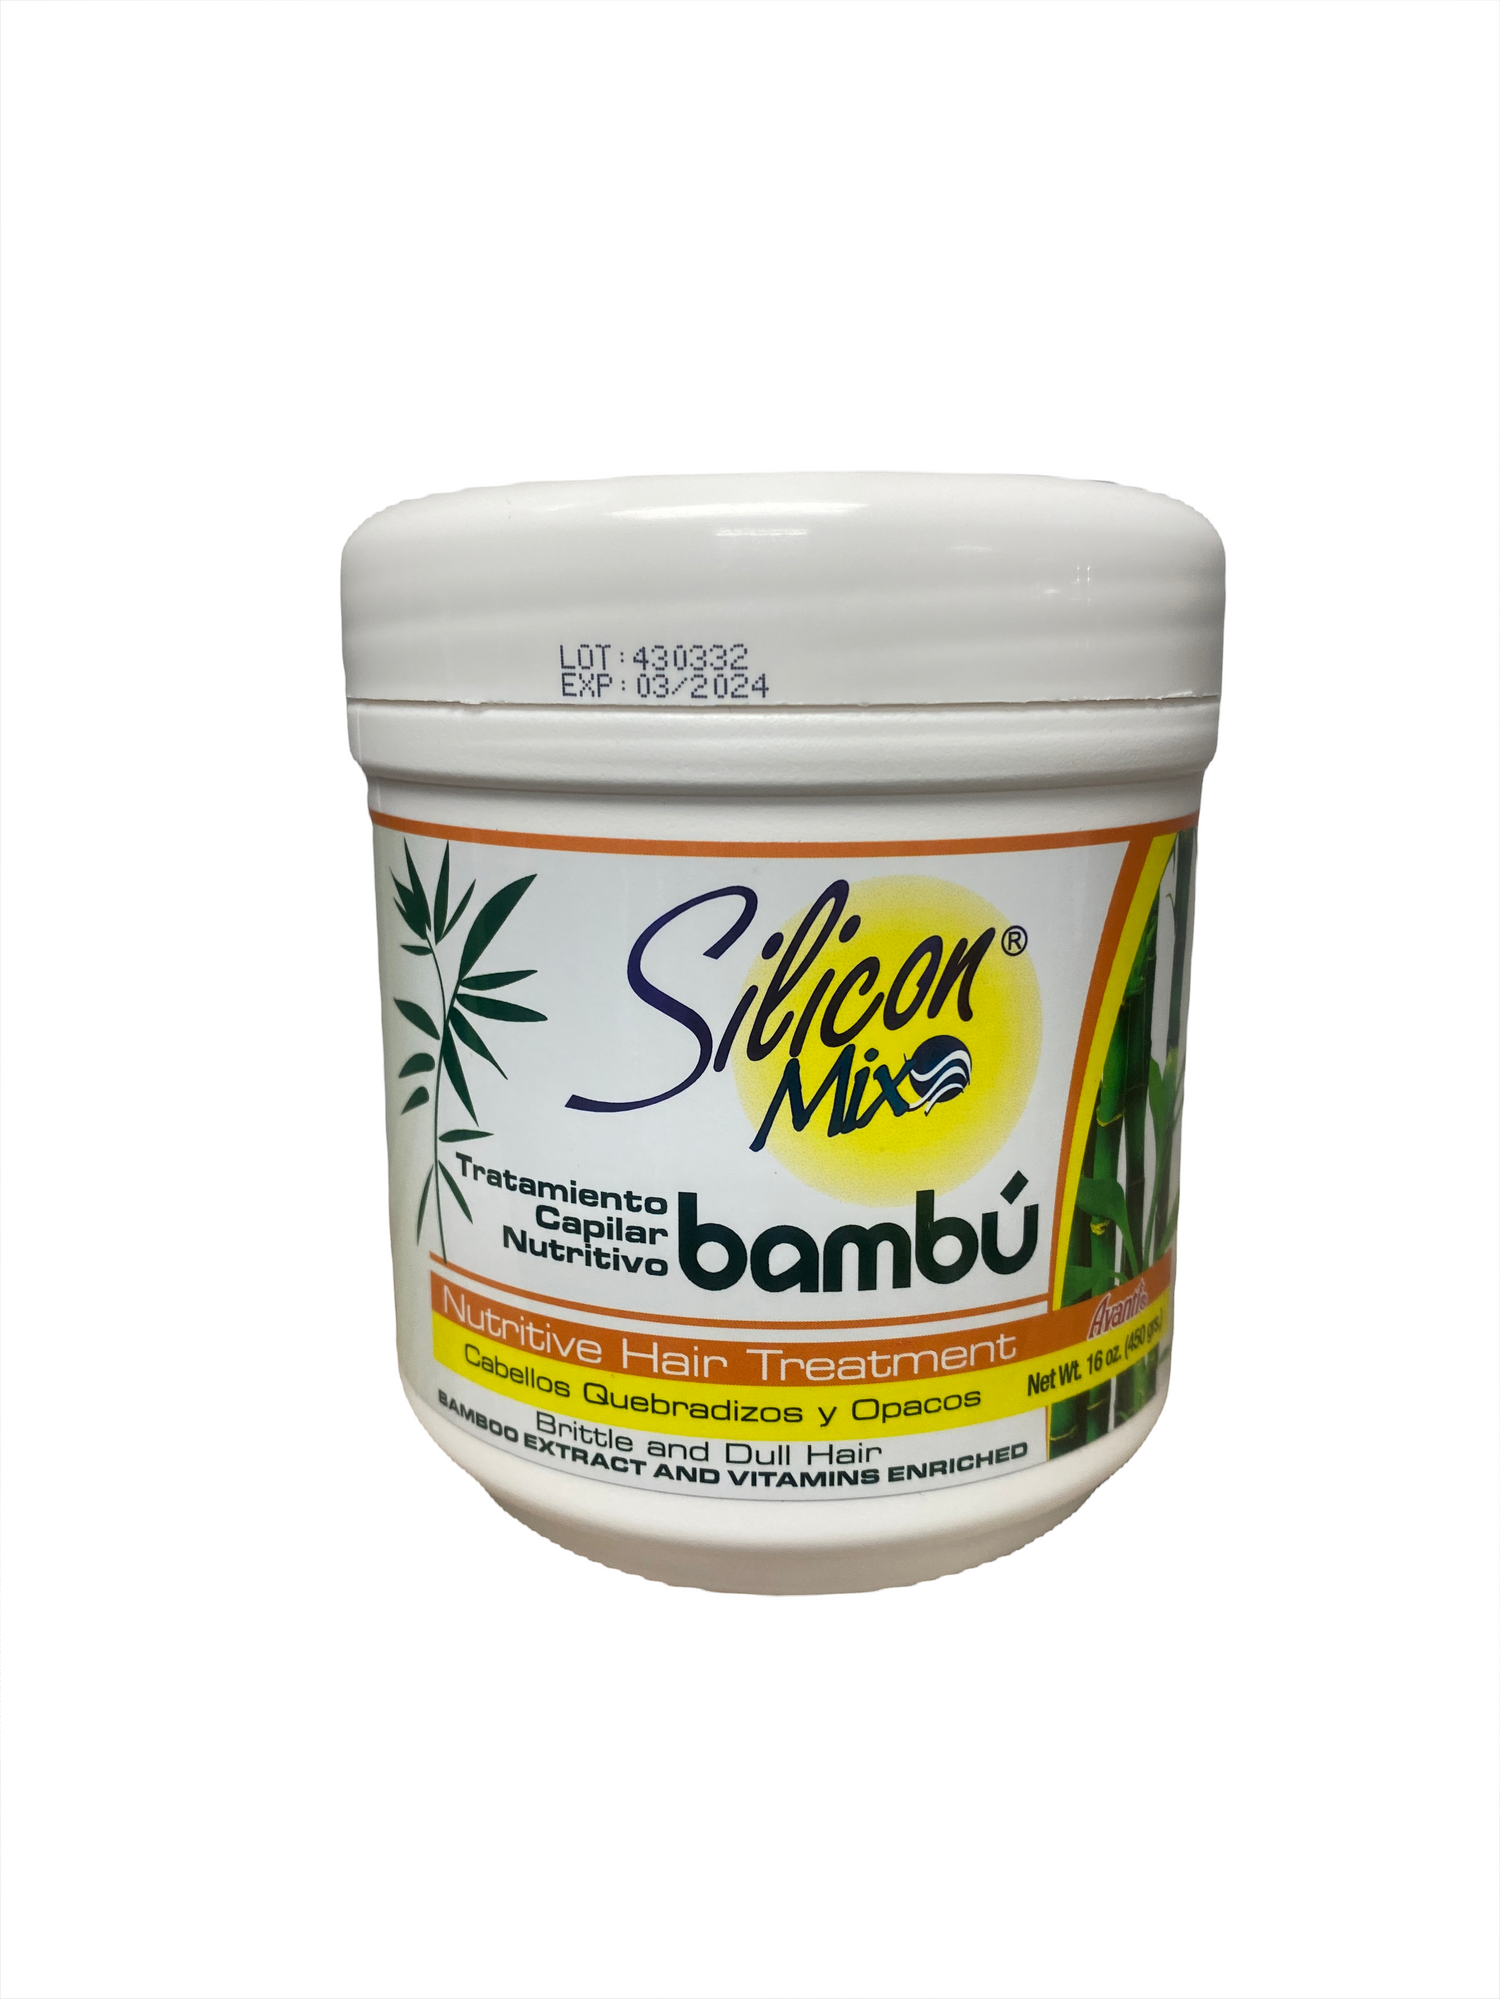 Avanti Silicon Mix Bambú Nutritive Hair Treatment, 8 oz